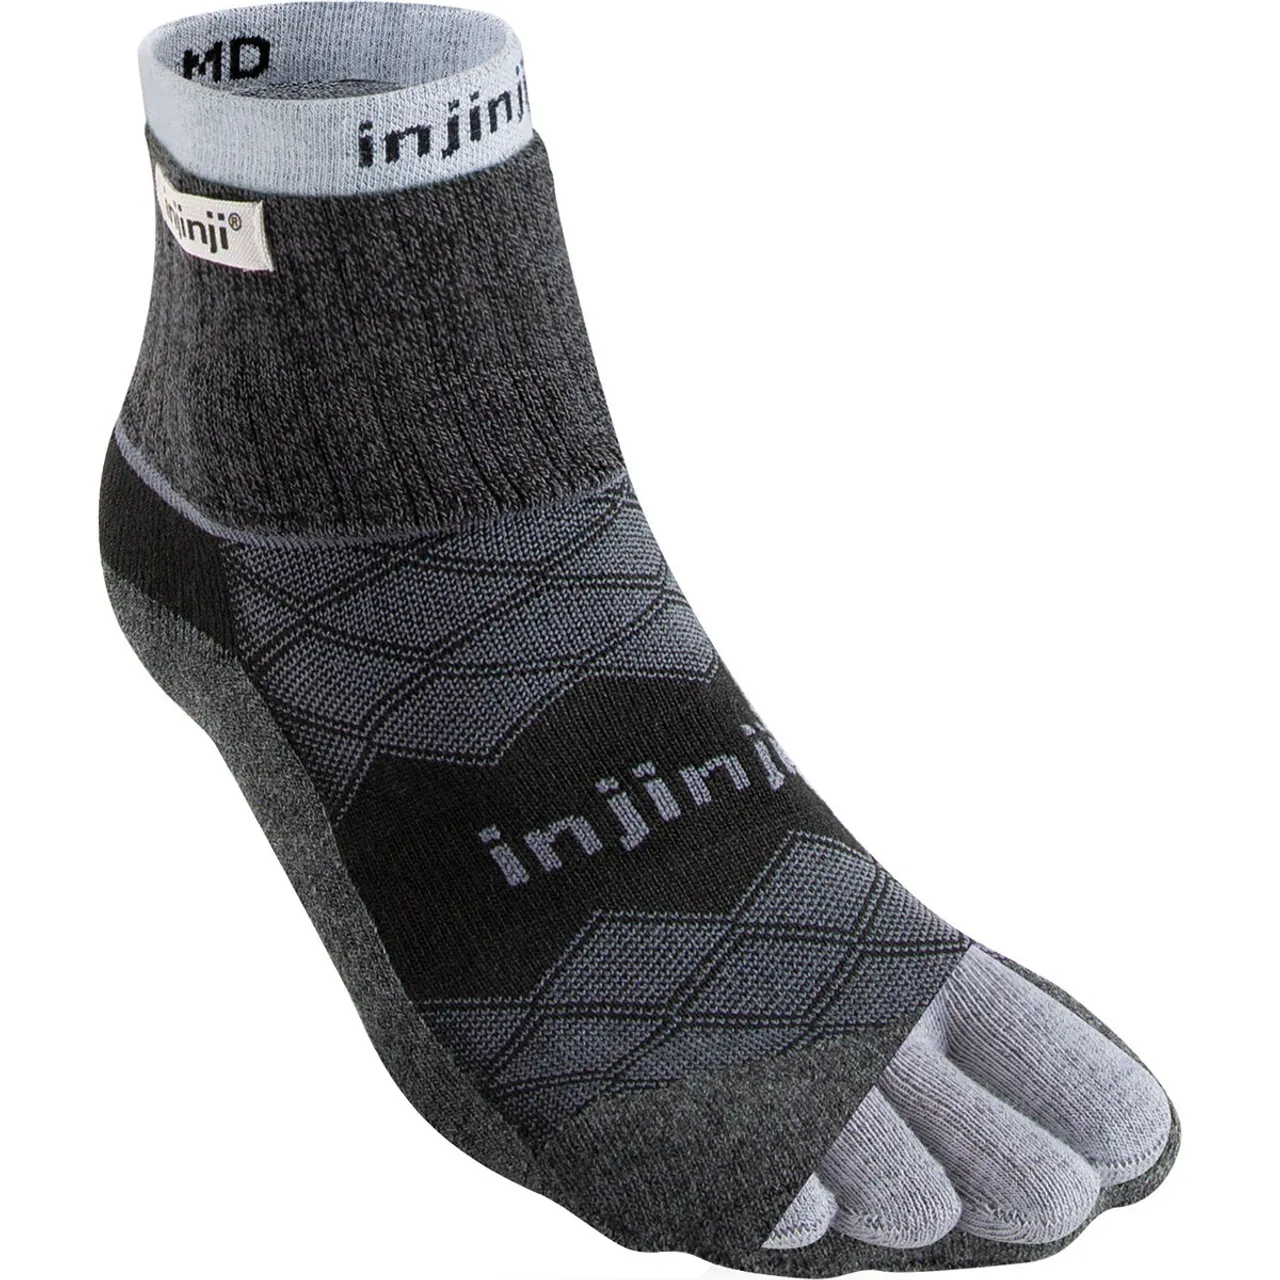 Injinji Herren Liner + Runner Mini-Crew Socken